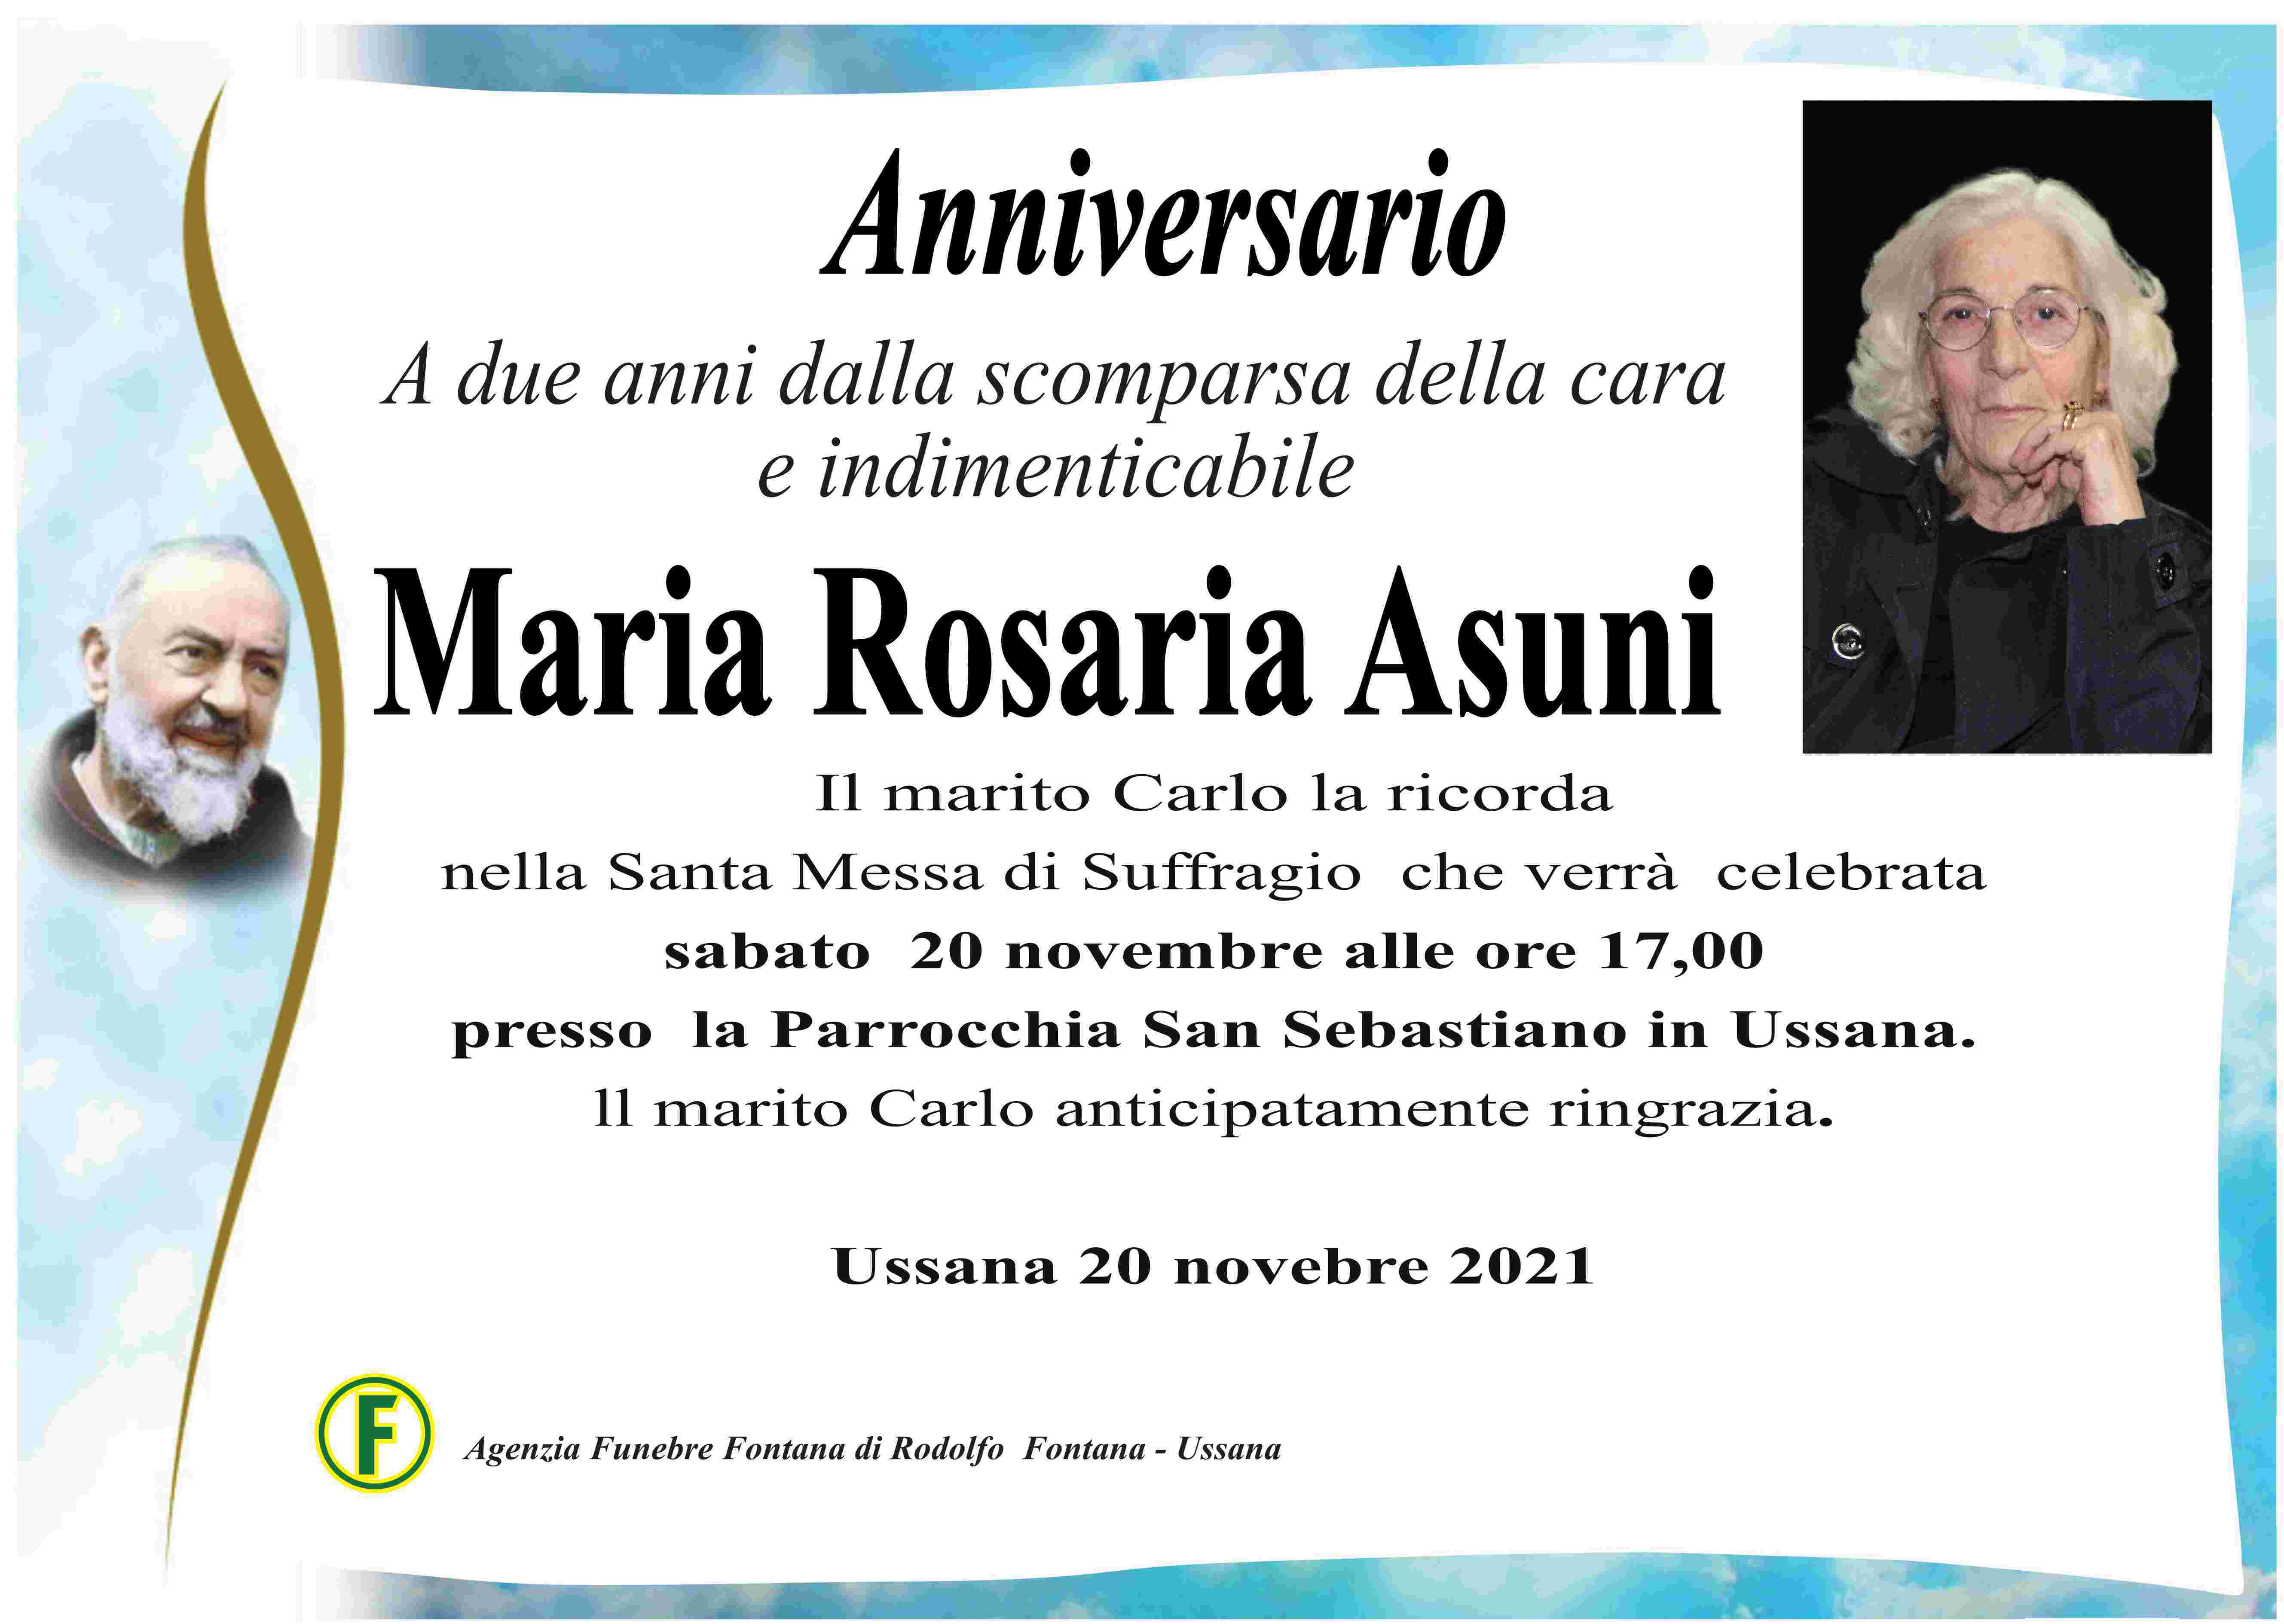 Maria Rosaria Asuni